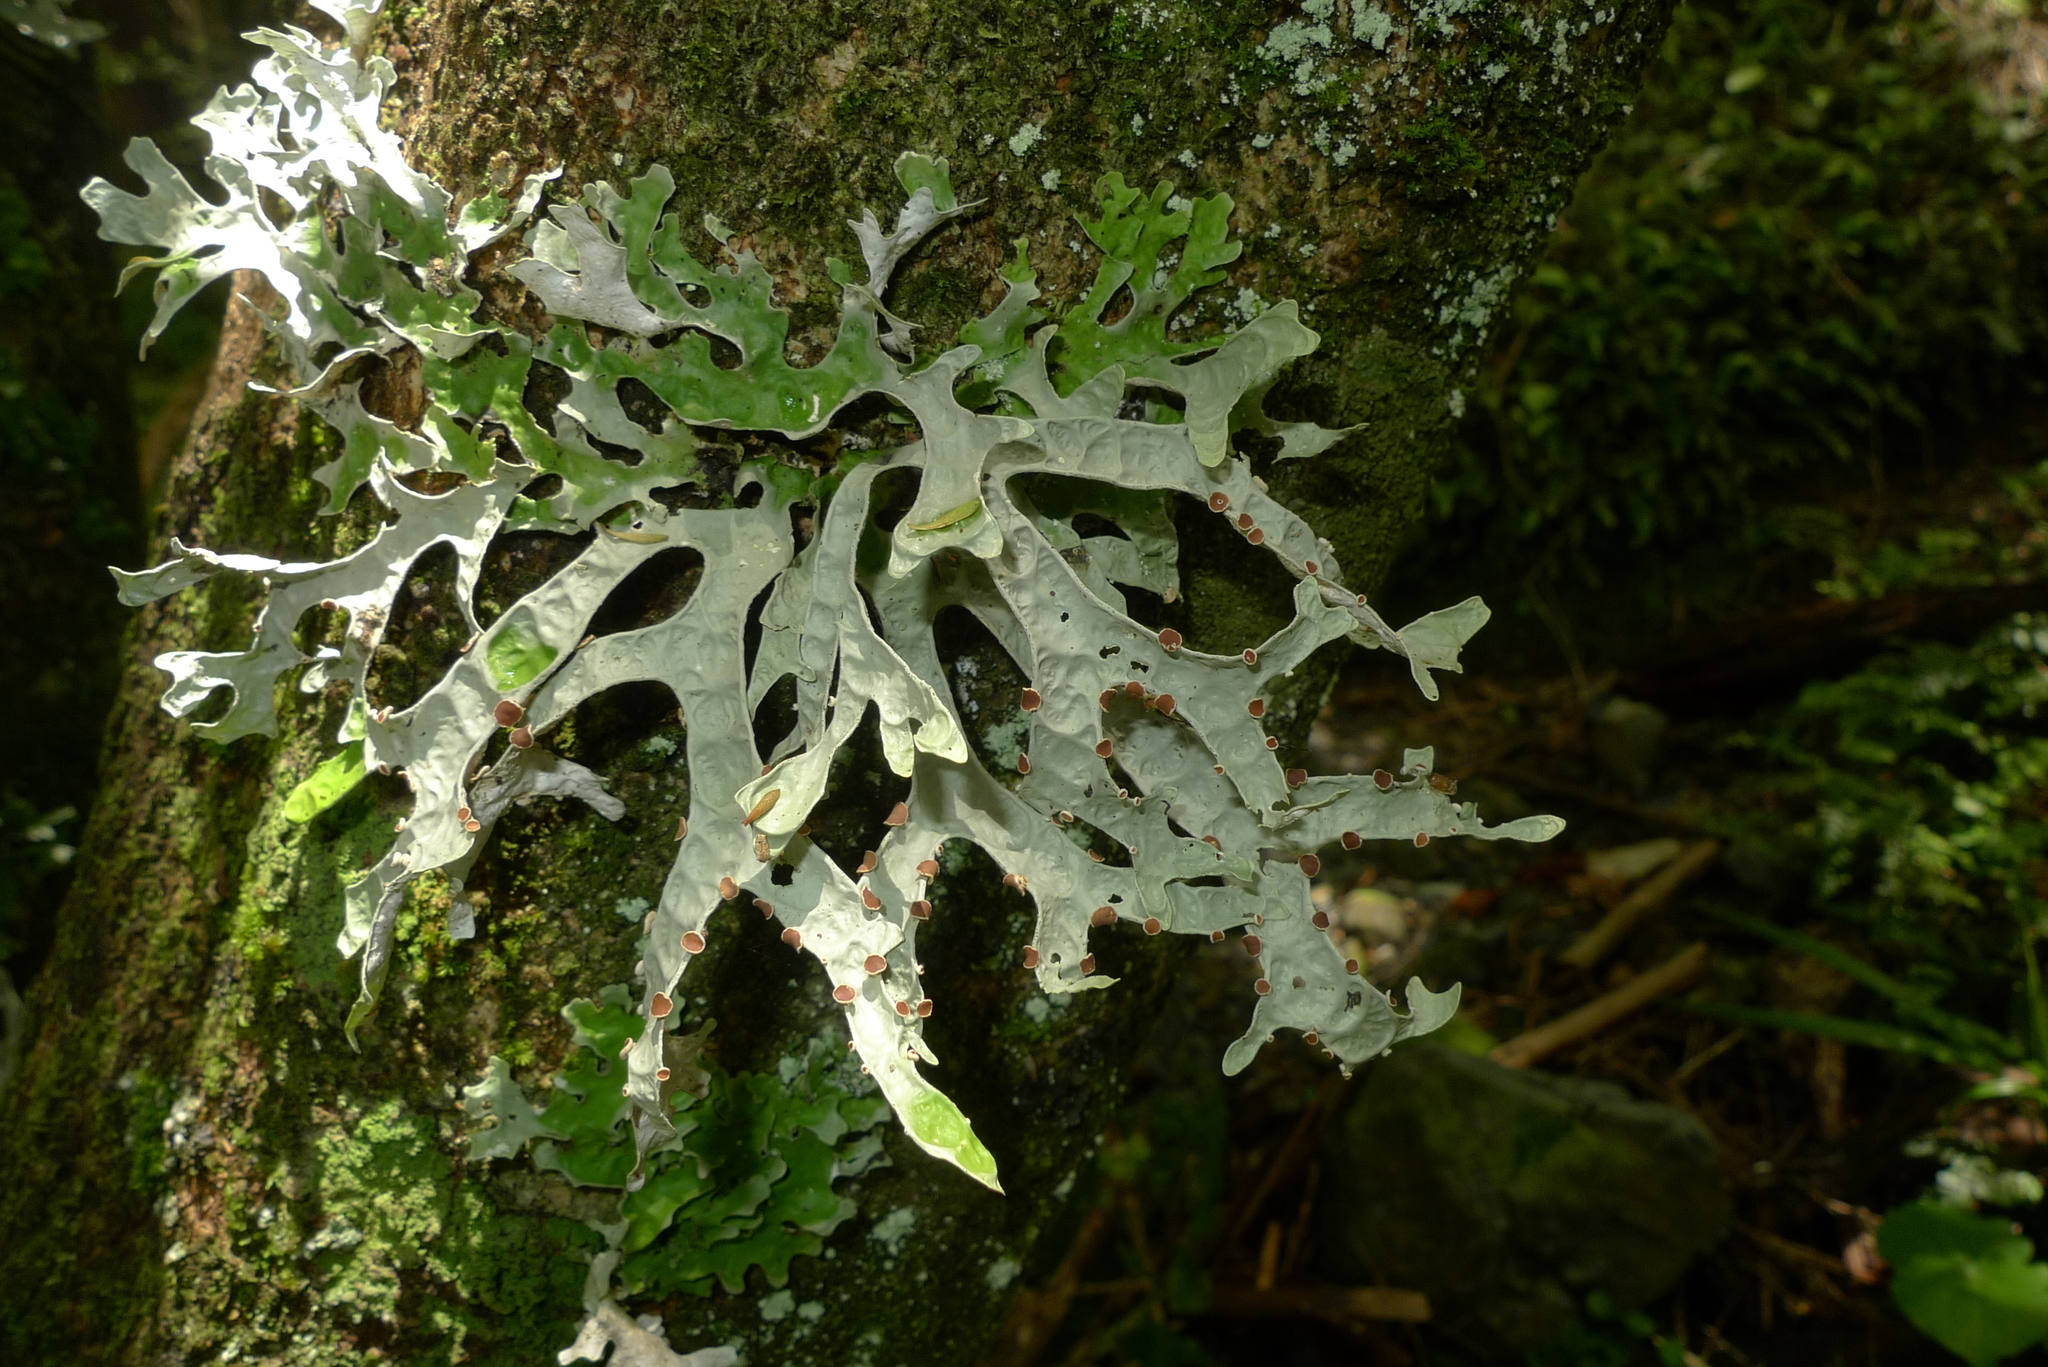 Pseudocyphellaria image